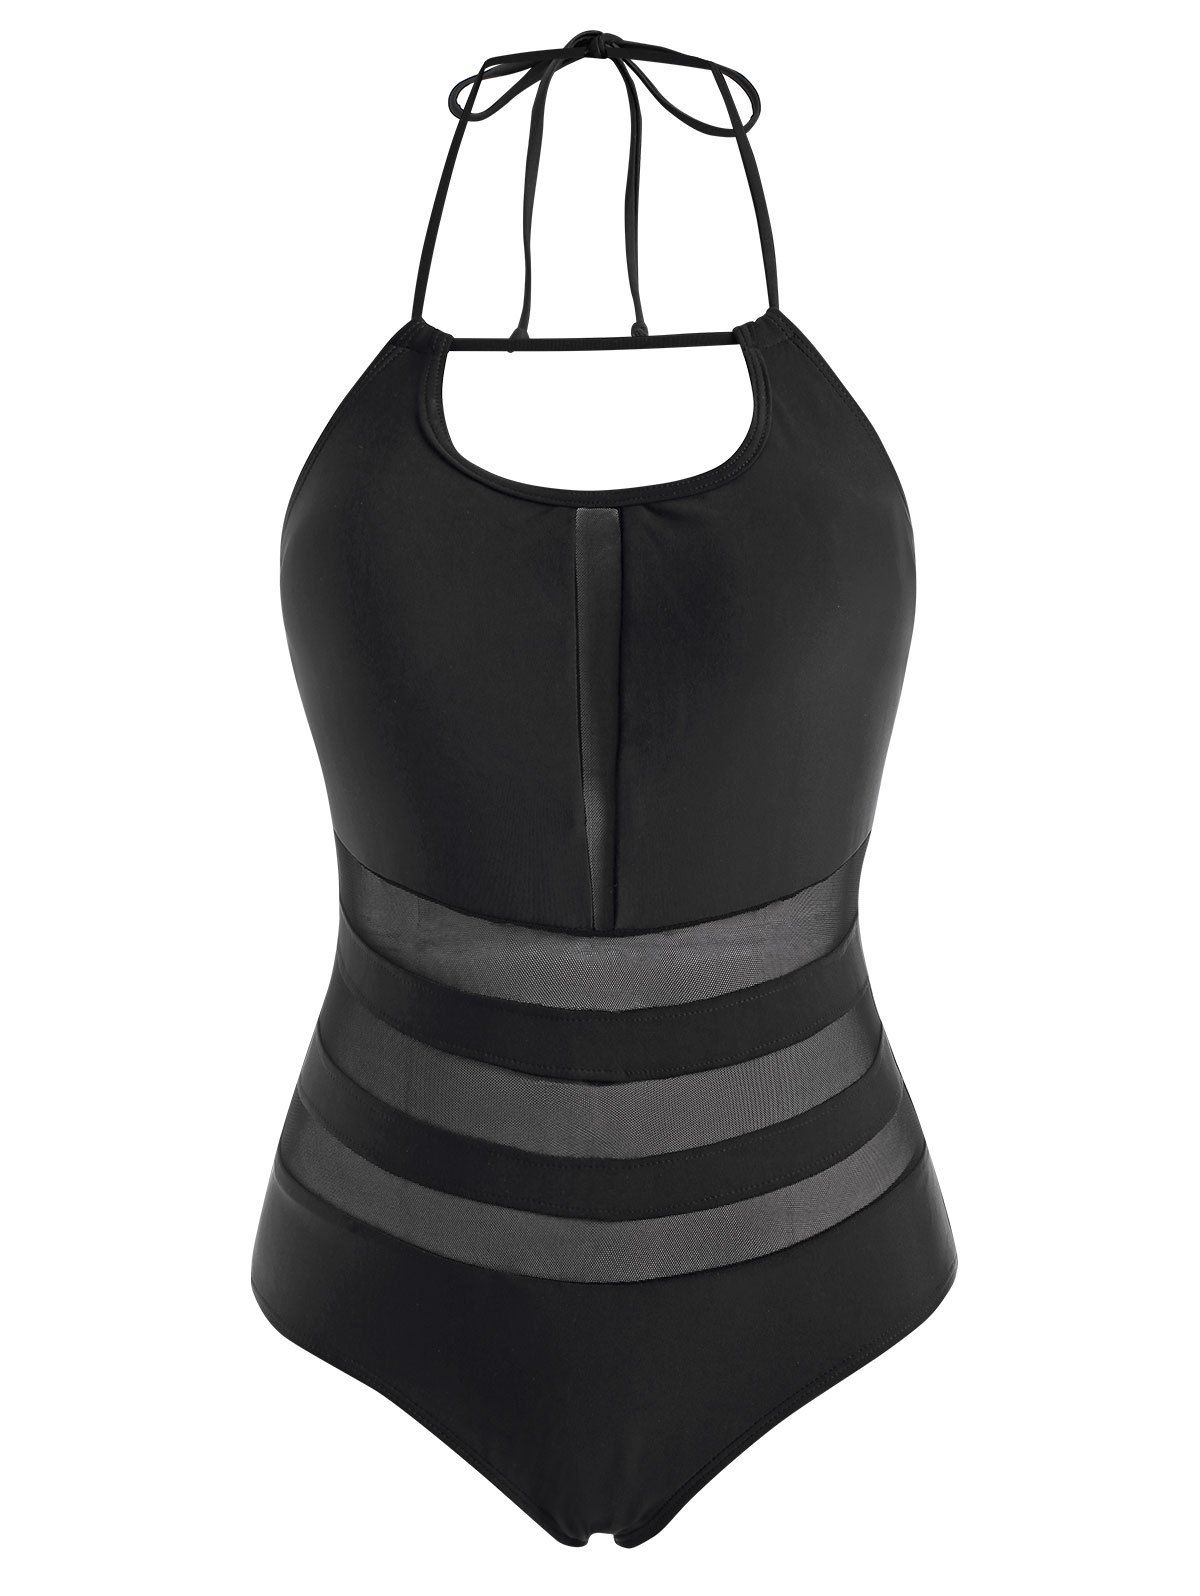 Tummy Control One-piece Swimwear Set Black Mesh Insert Swimsuit Tie Back Halter One-piece Swimsuit - BLACK XXXL